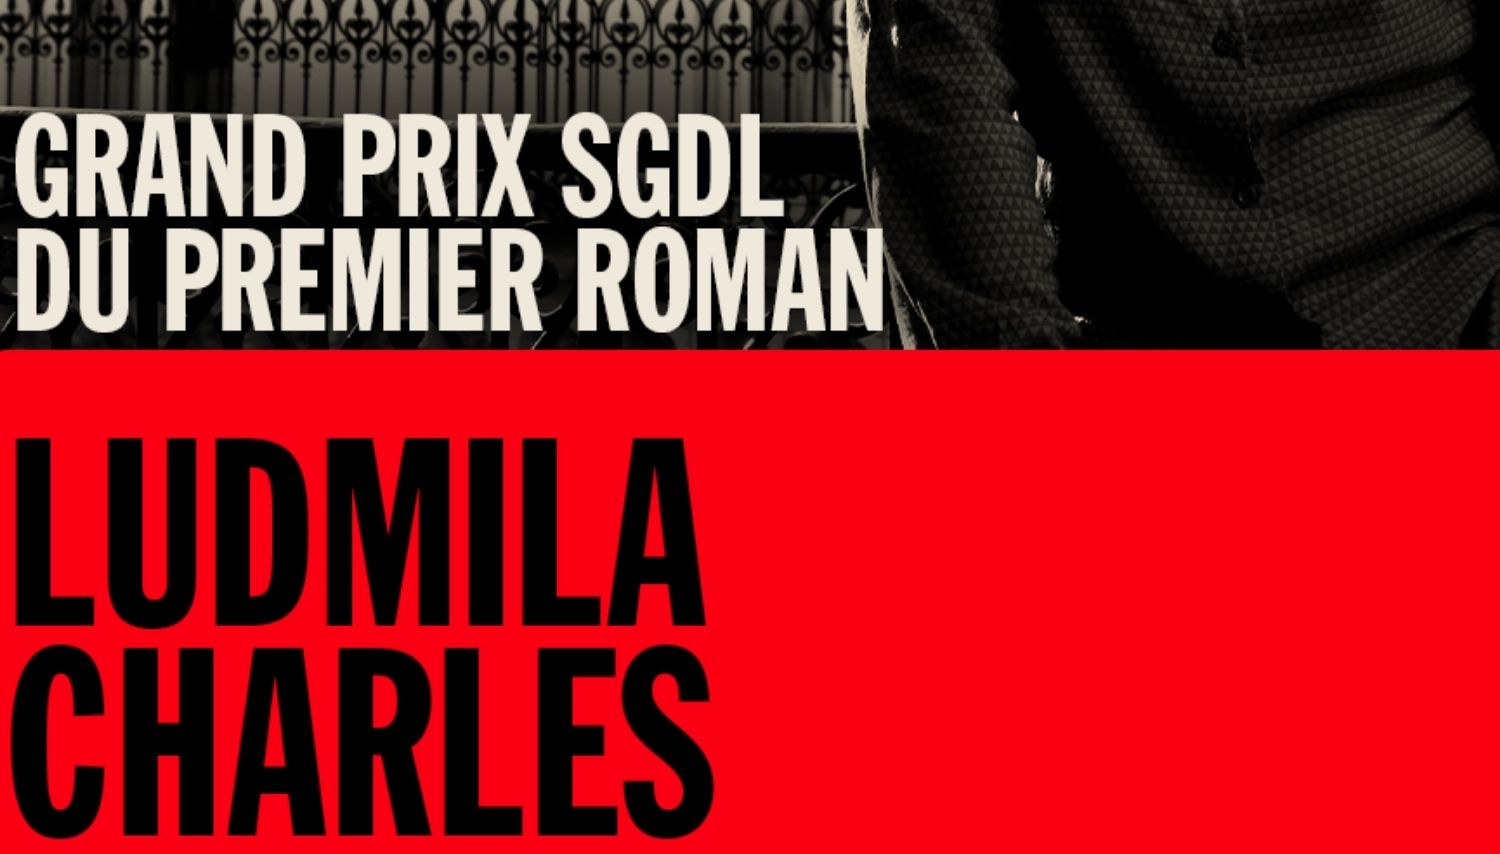 Grand Prix SGDL - Ludmina Charles